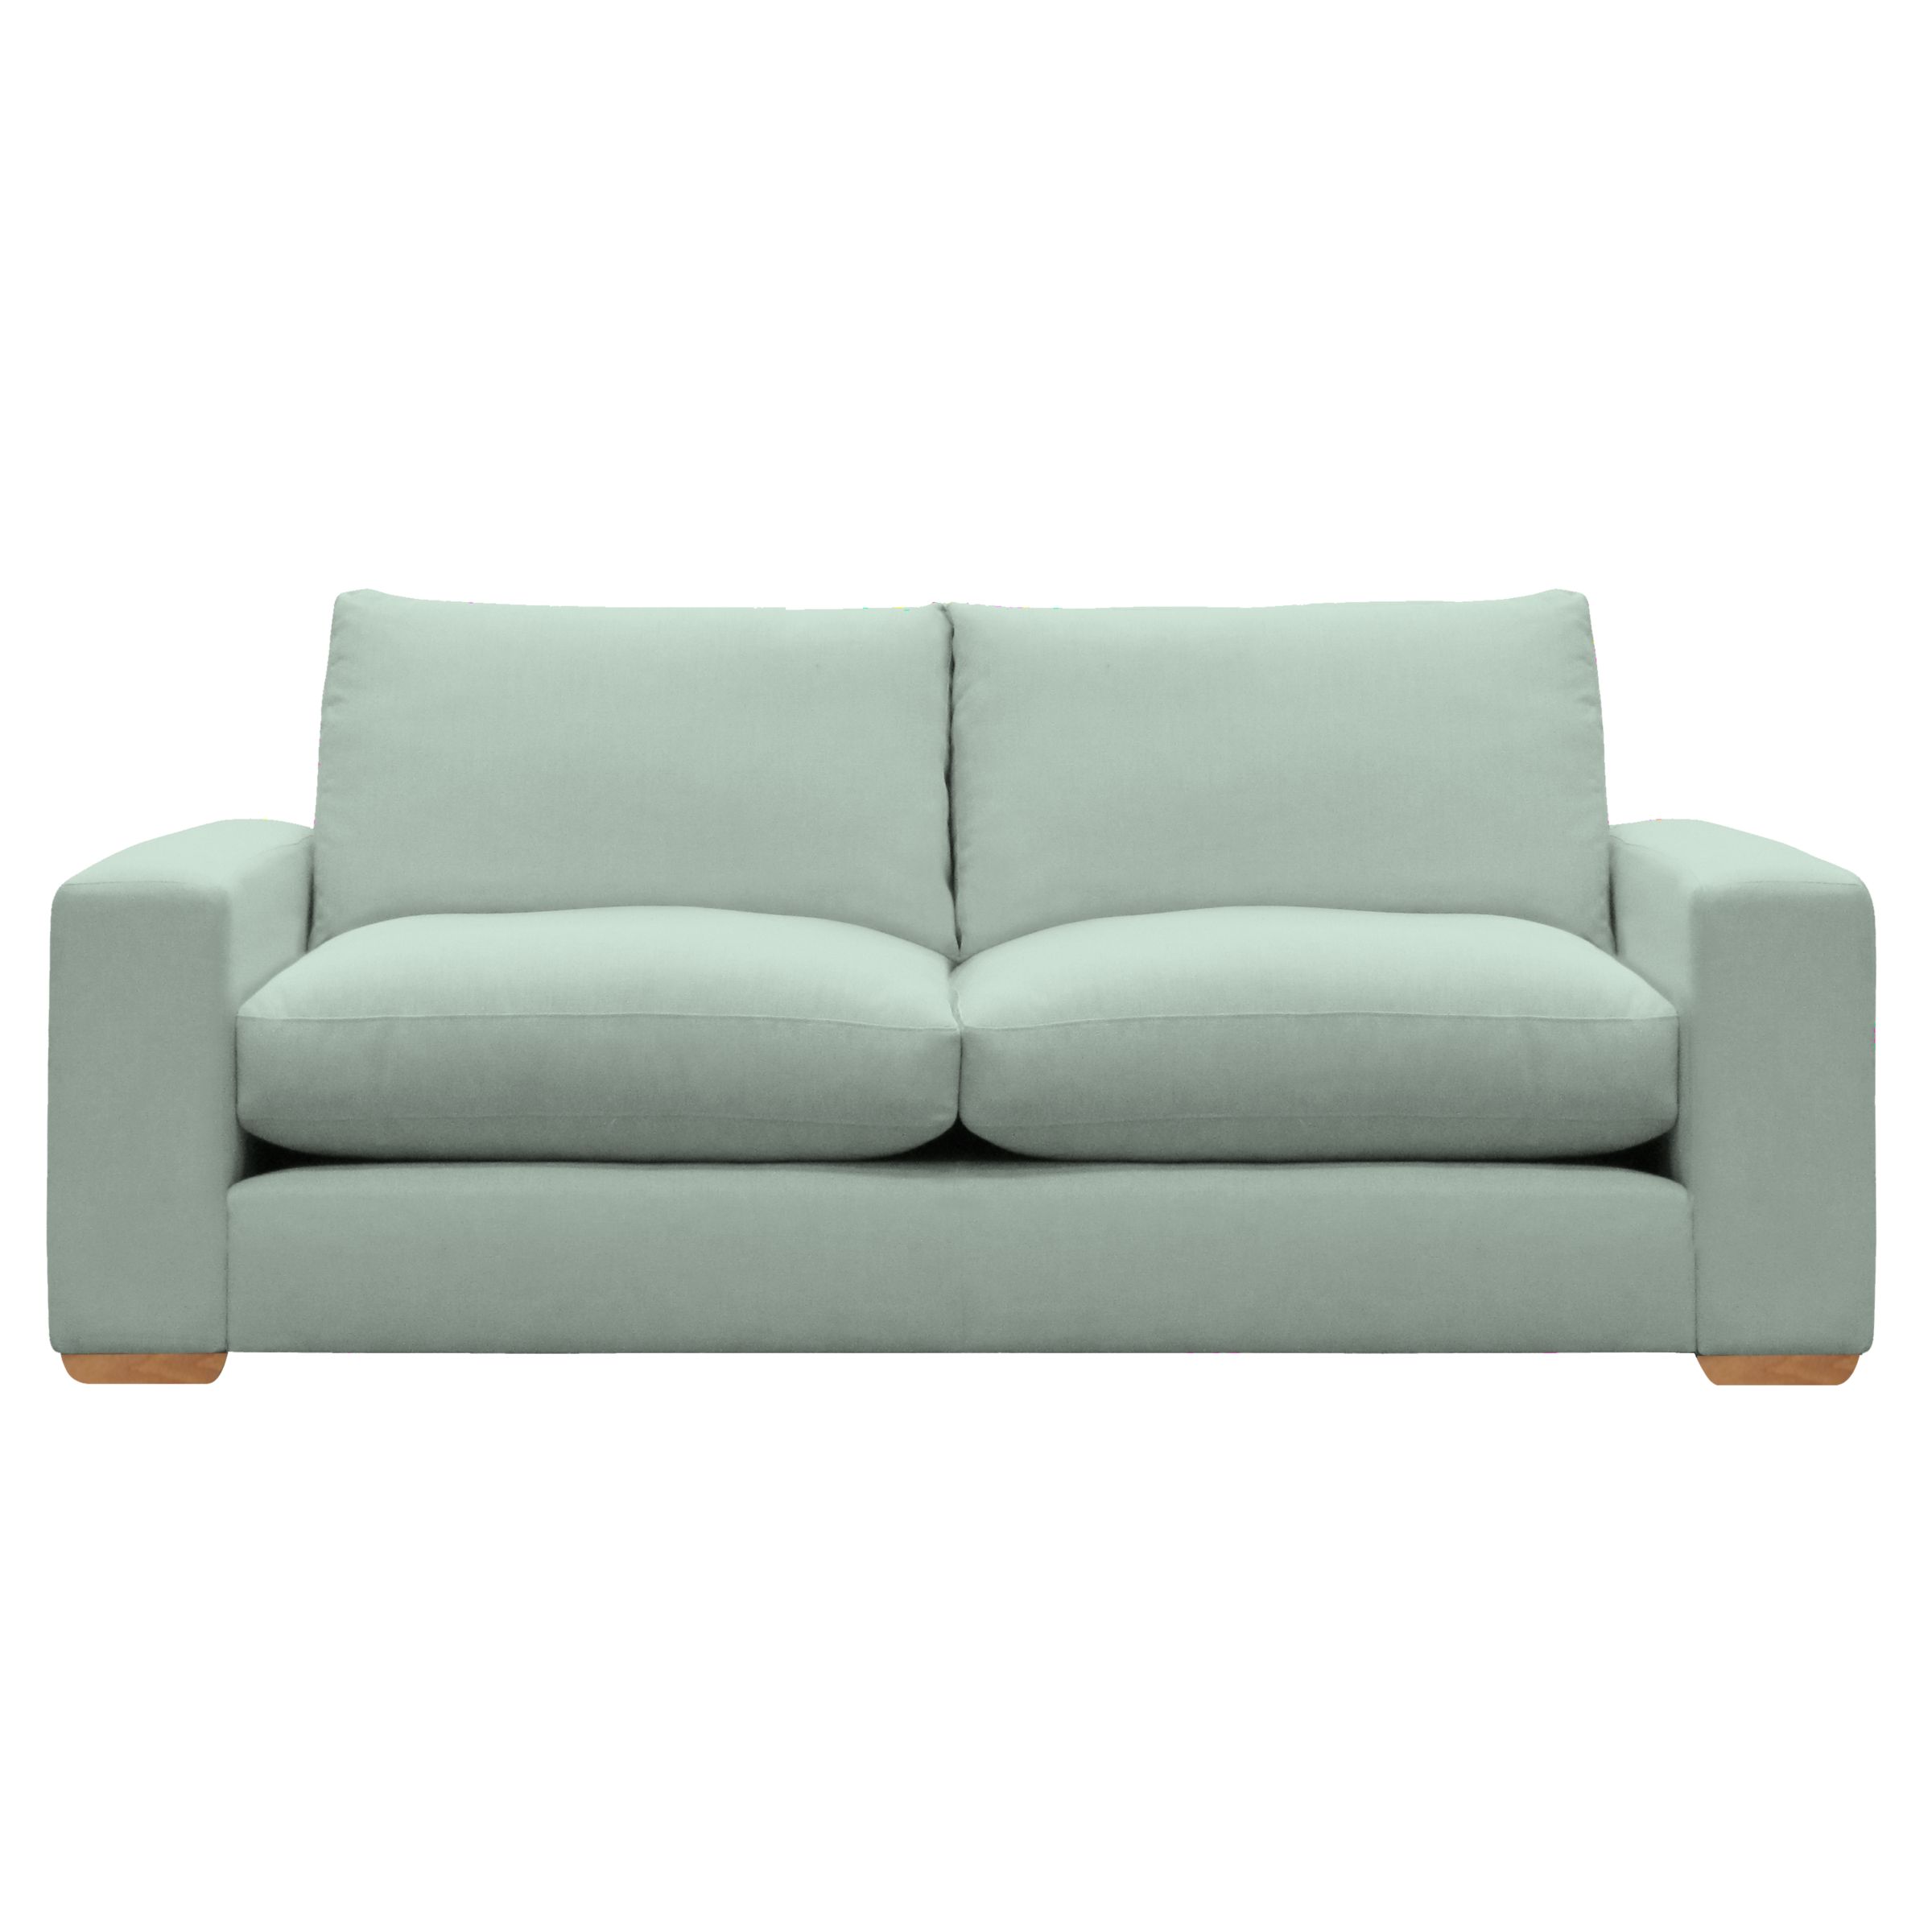 John Lewis Options Wide Arm Large Sofa, Eaton Duck Egg, width 200cm